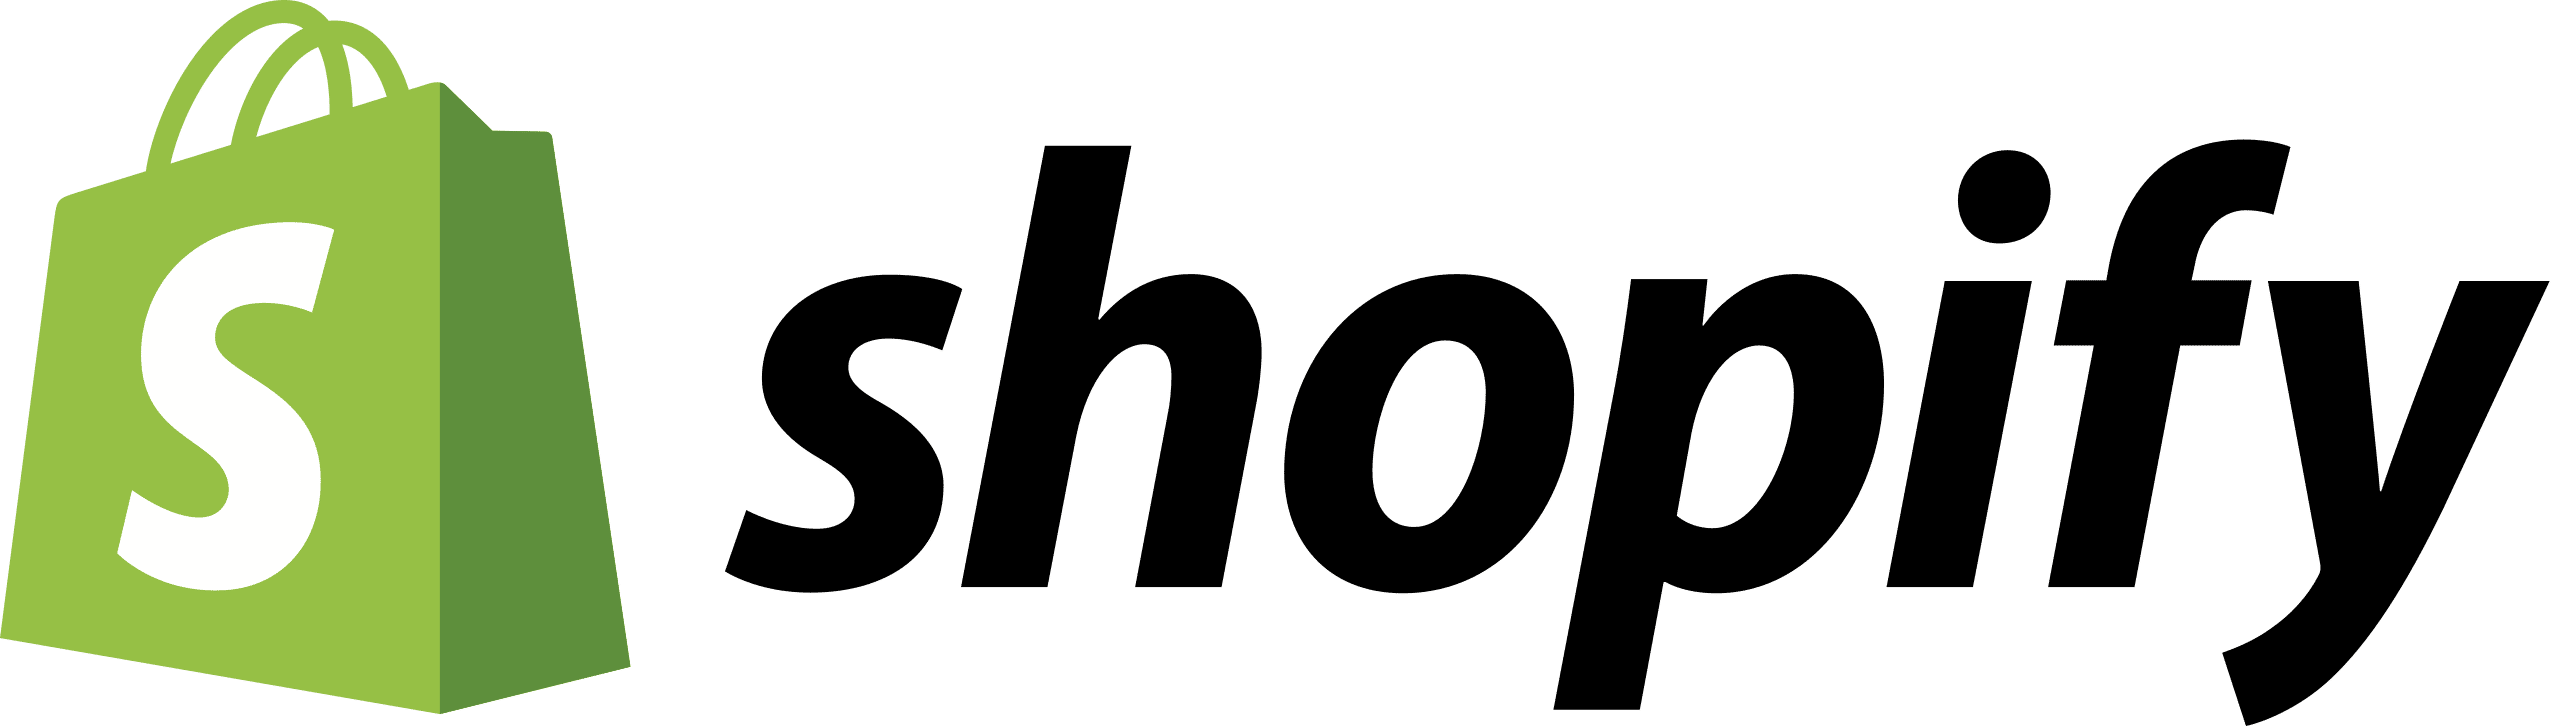 Shopify POS Logo